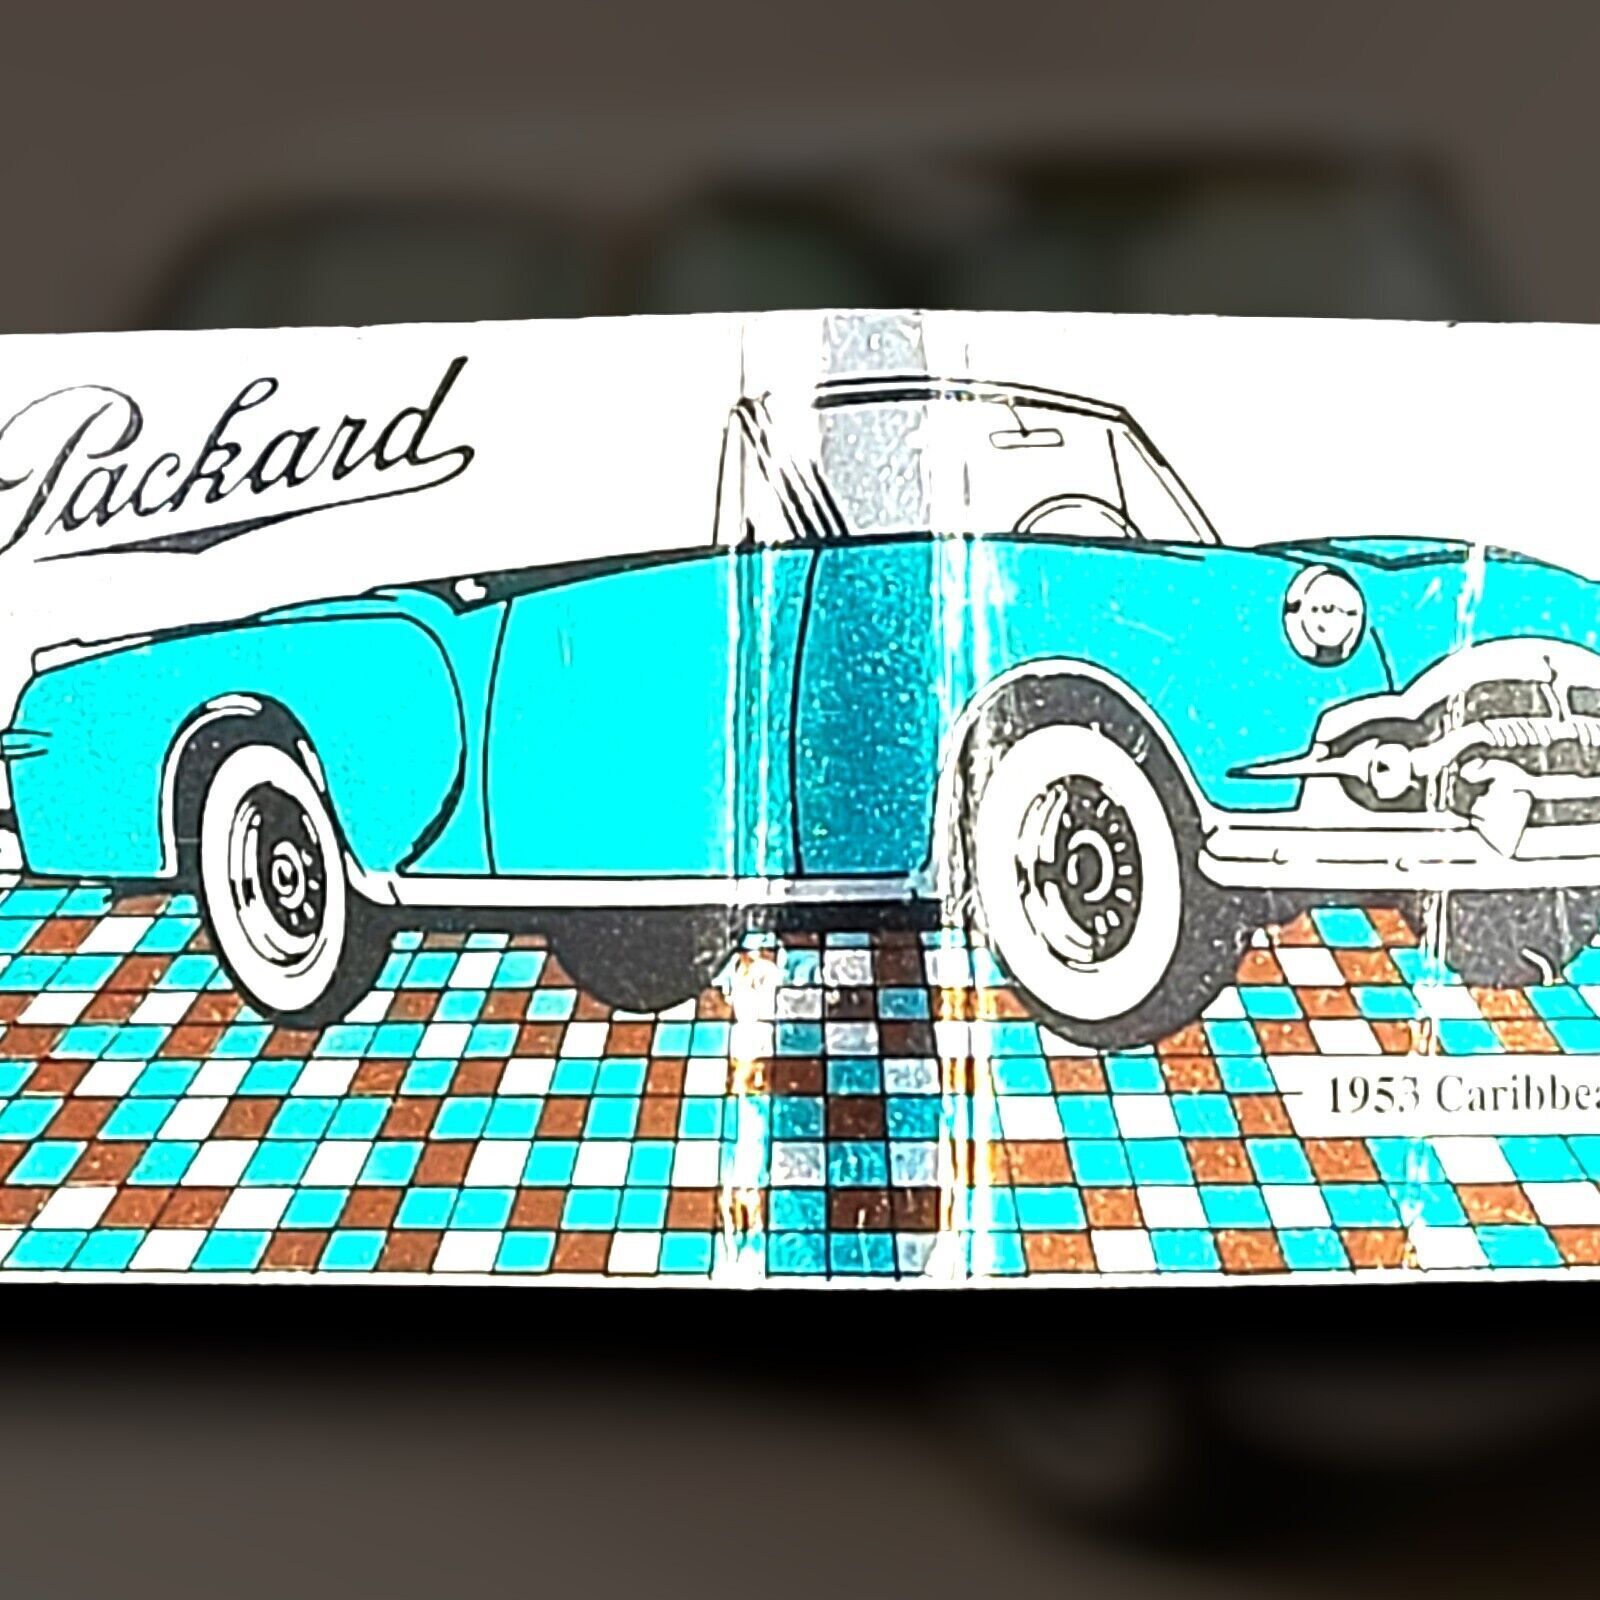 Packard Motor Car Match Book 1953 Caribbean Advertising Silver Blue Foiled Full